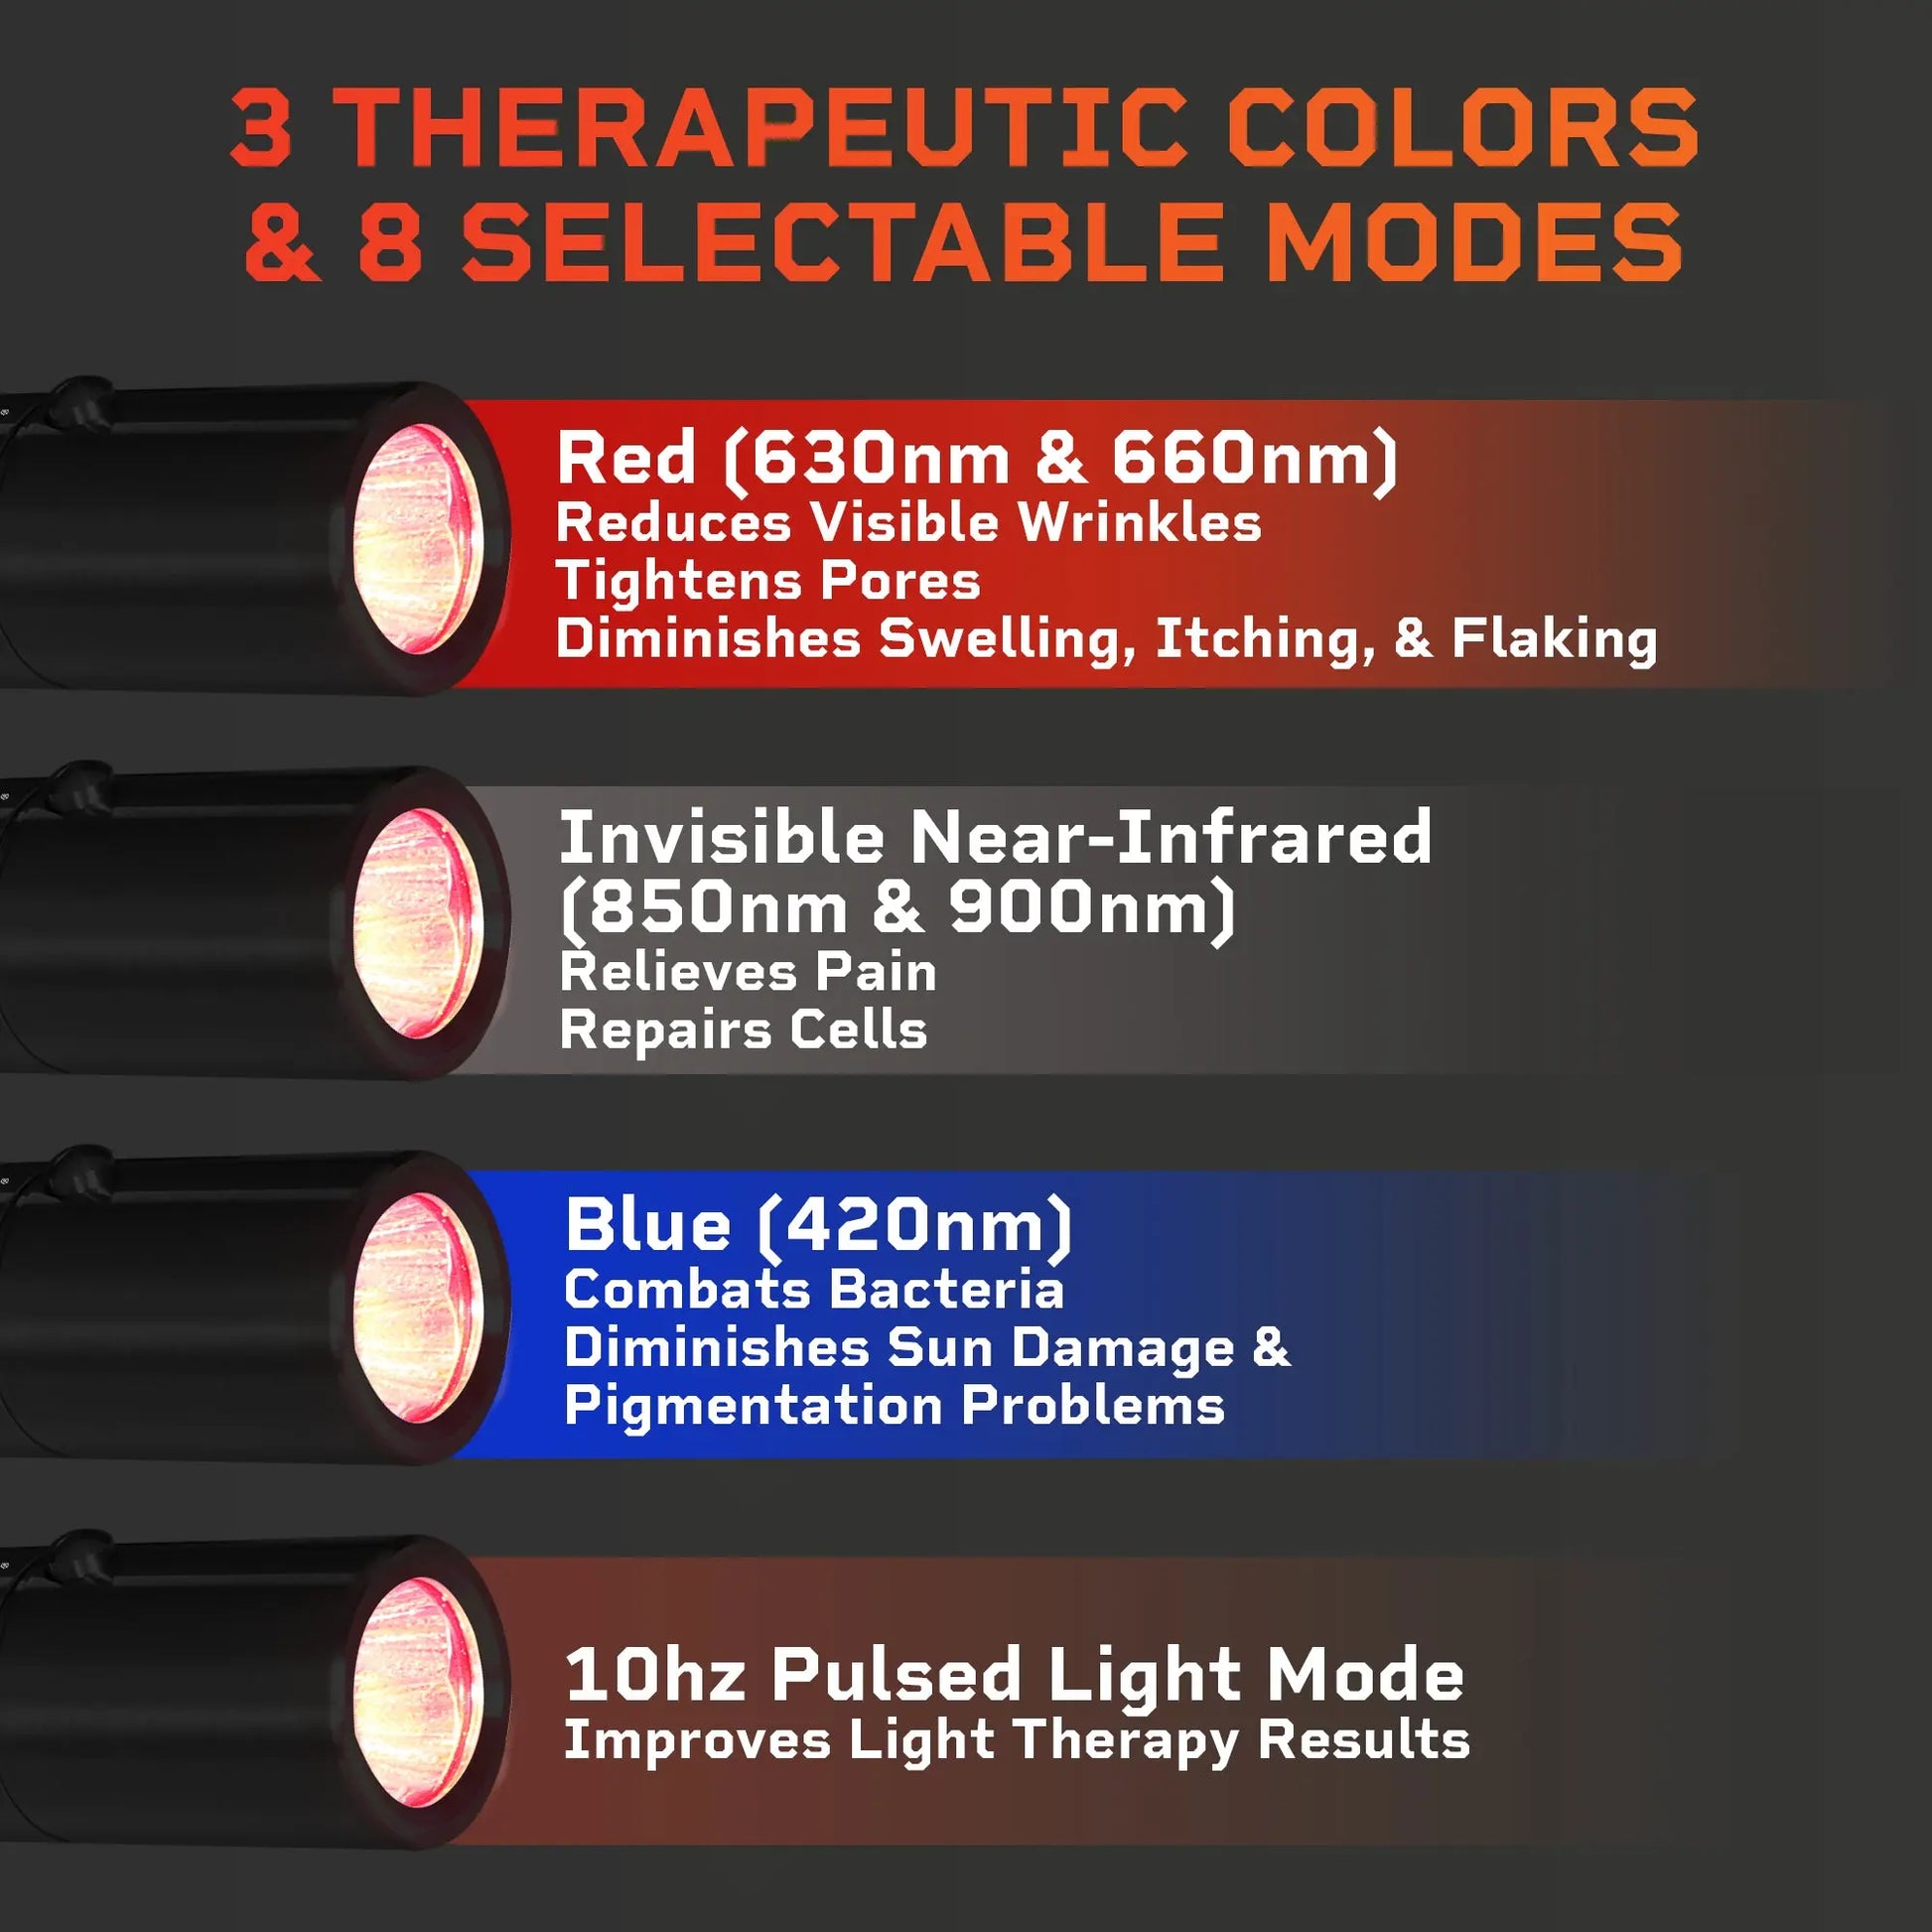 LumiCure Pro Light Therapy Torch Lifepro